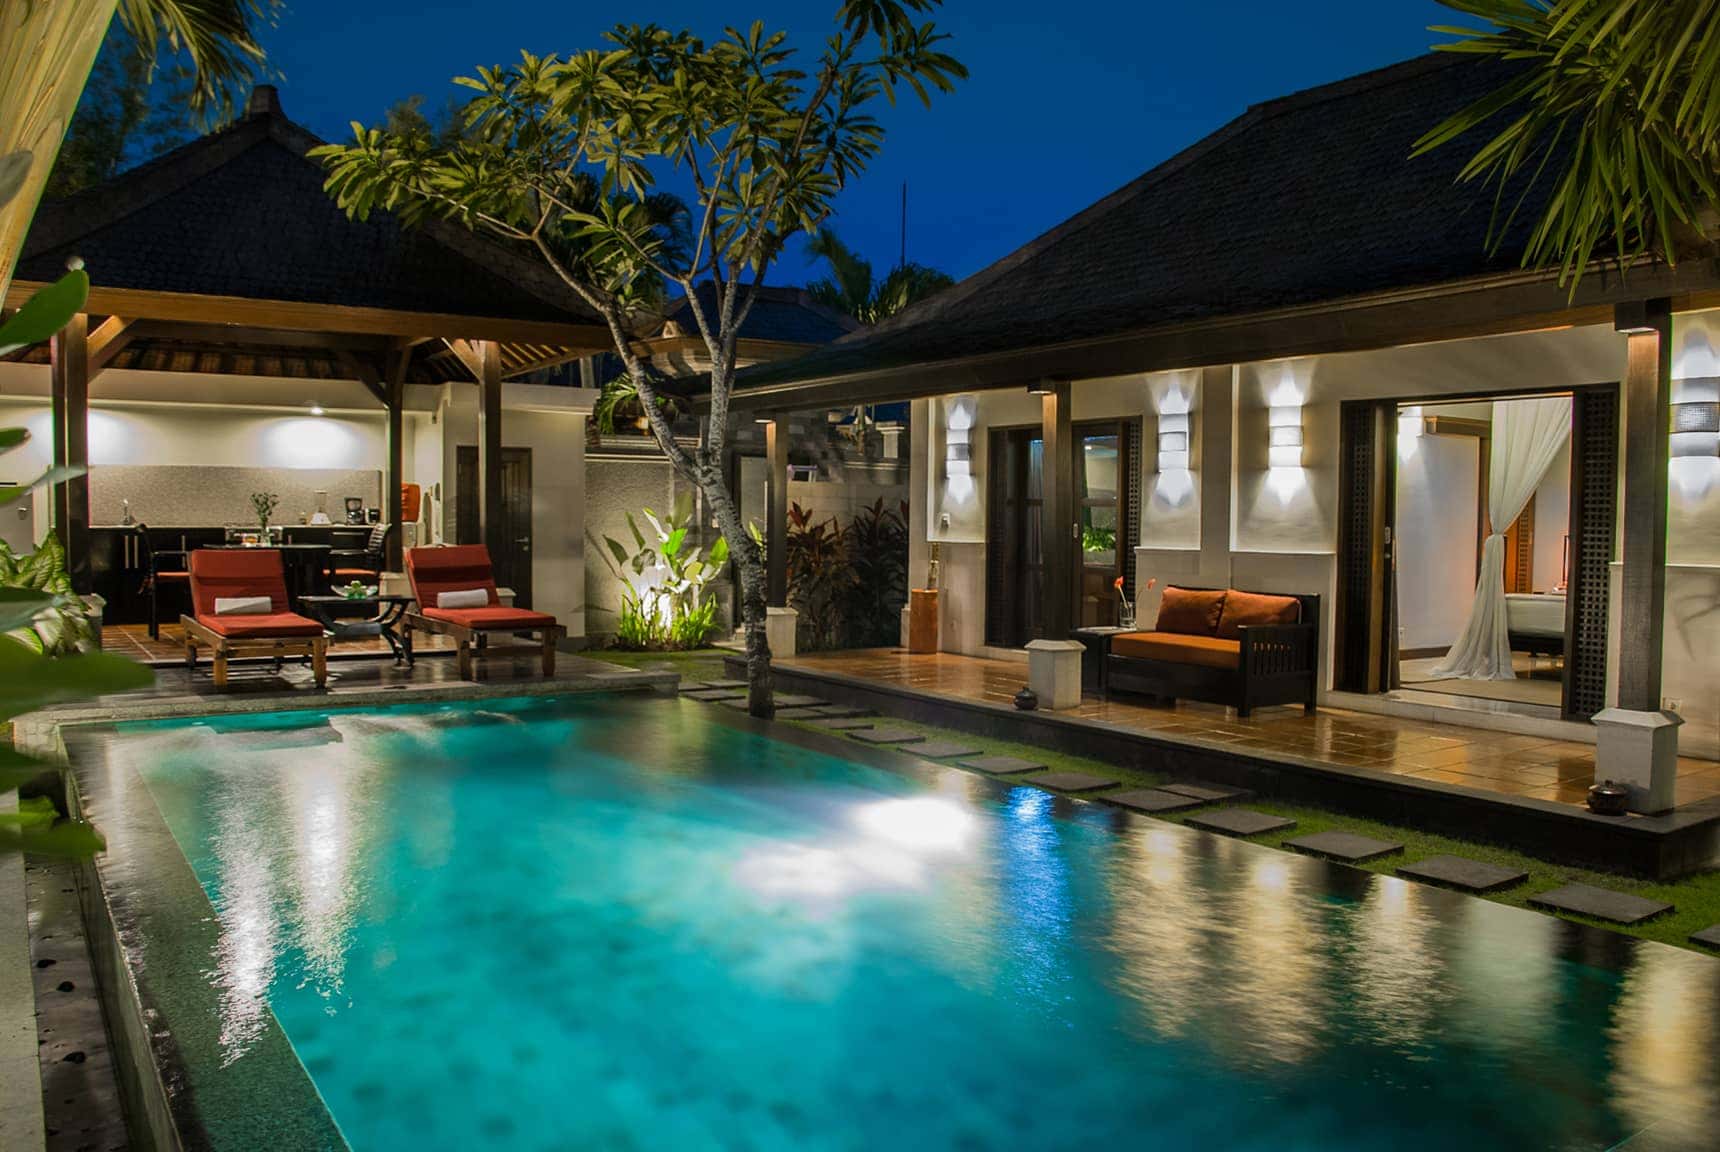 Ulin Villas - Seminyak, Bali Indonesia (Bali villa photography by master photographer Rick Carmichael of LuxViz)